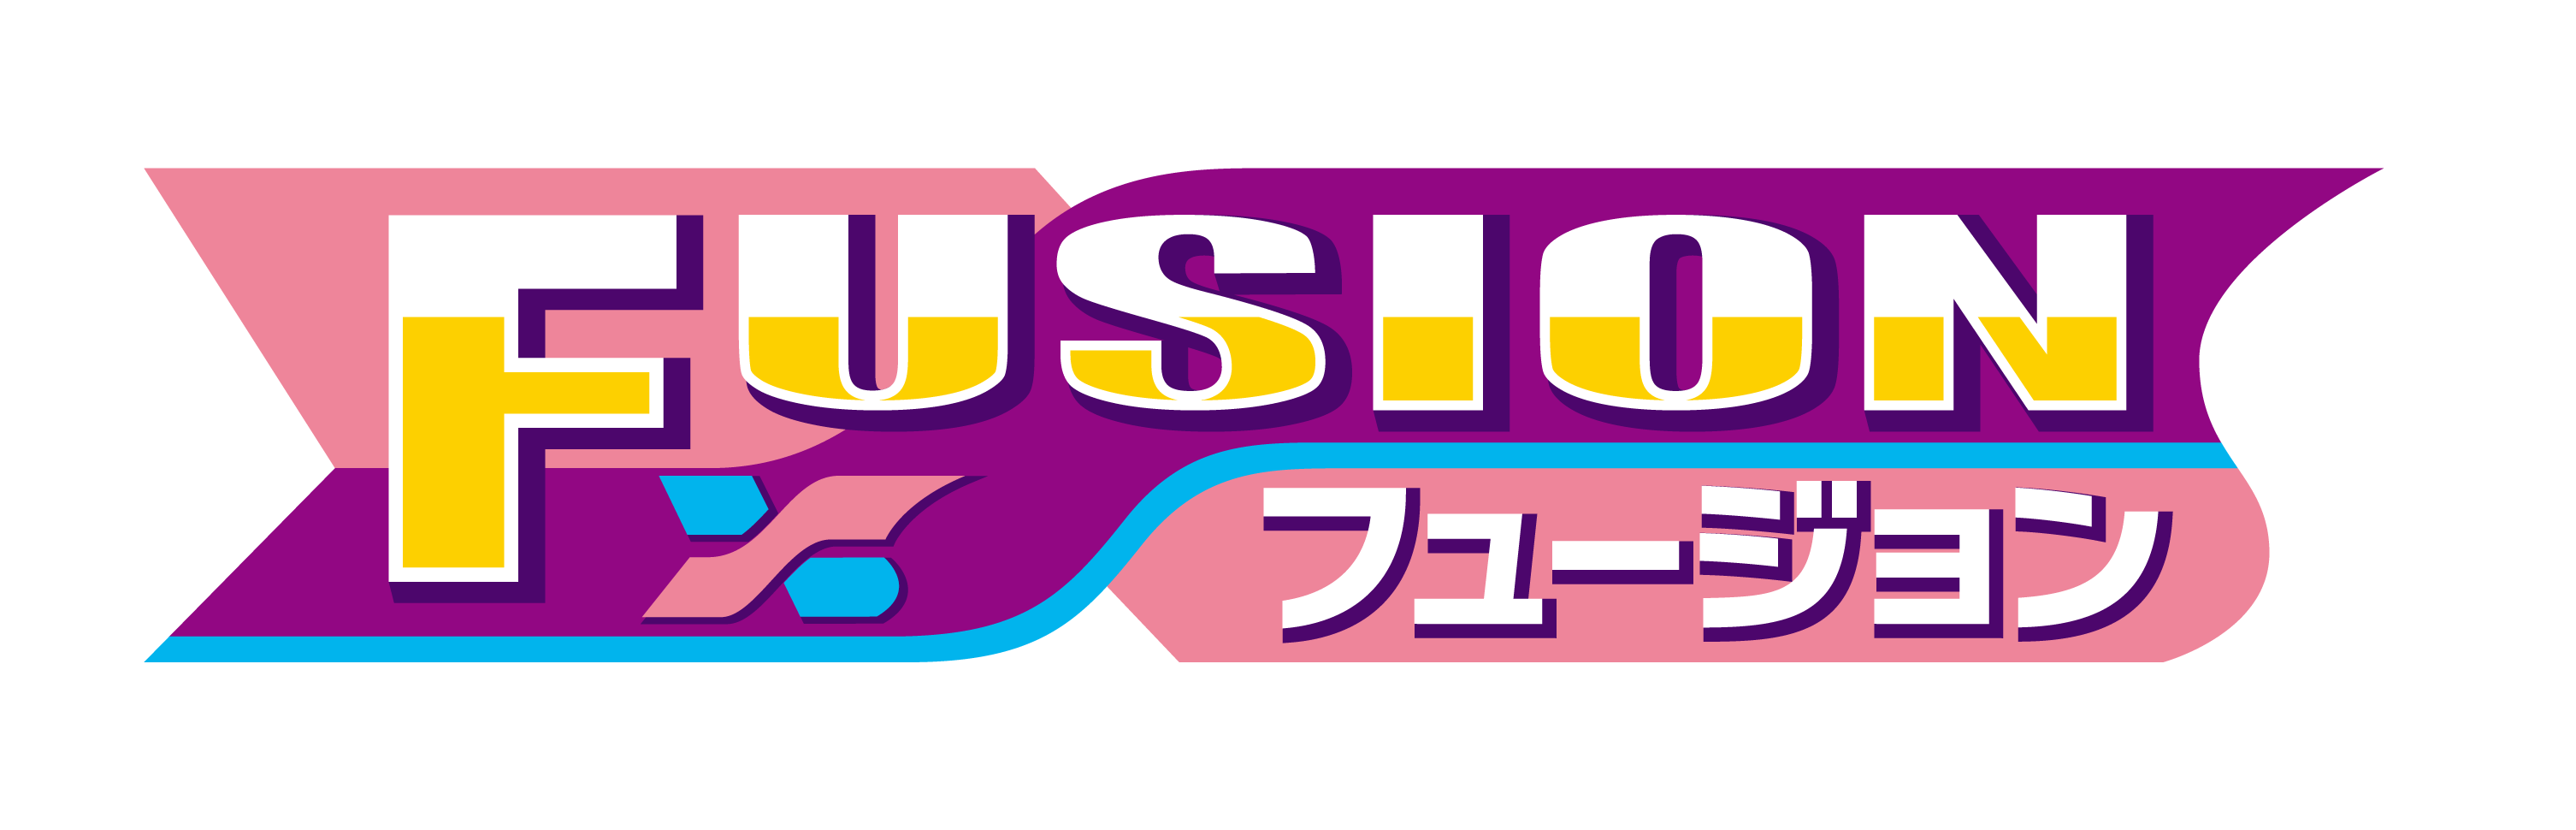 Pokemon fusion #12